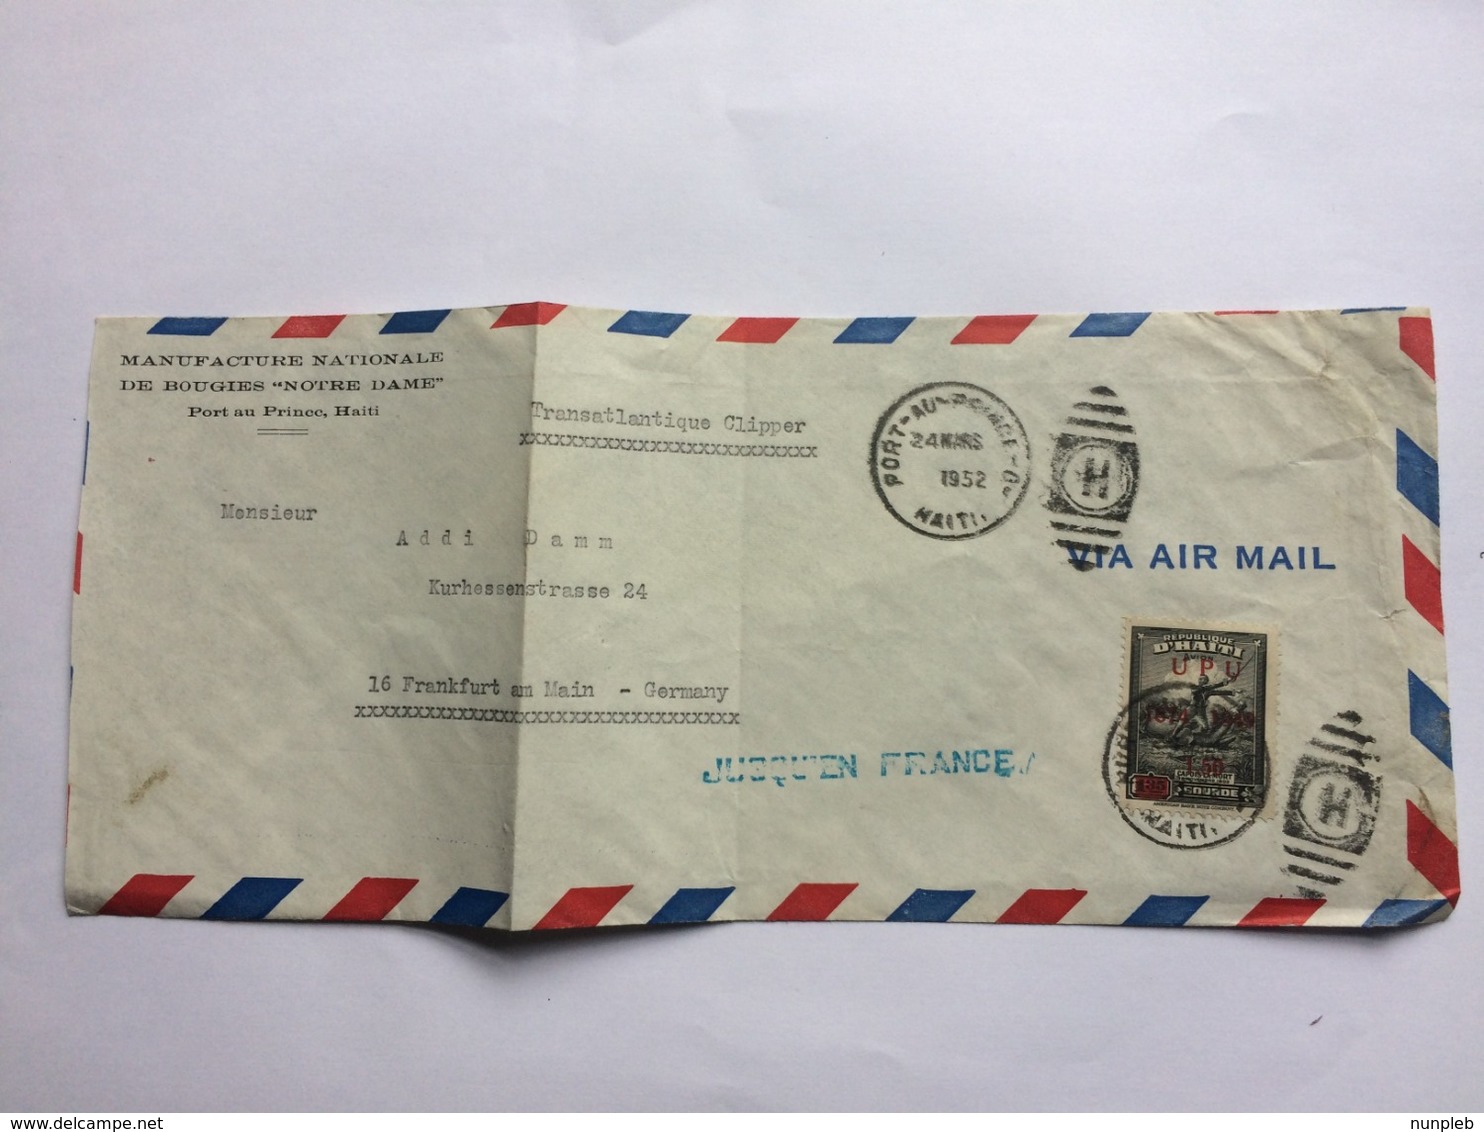 HAITI 1952 Air Mail Cover Port Au Prince To Frankfurt Germany With `Jusqu`en France` Cachet - Haití